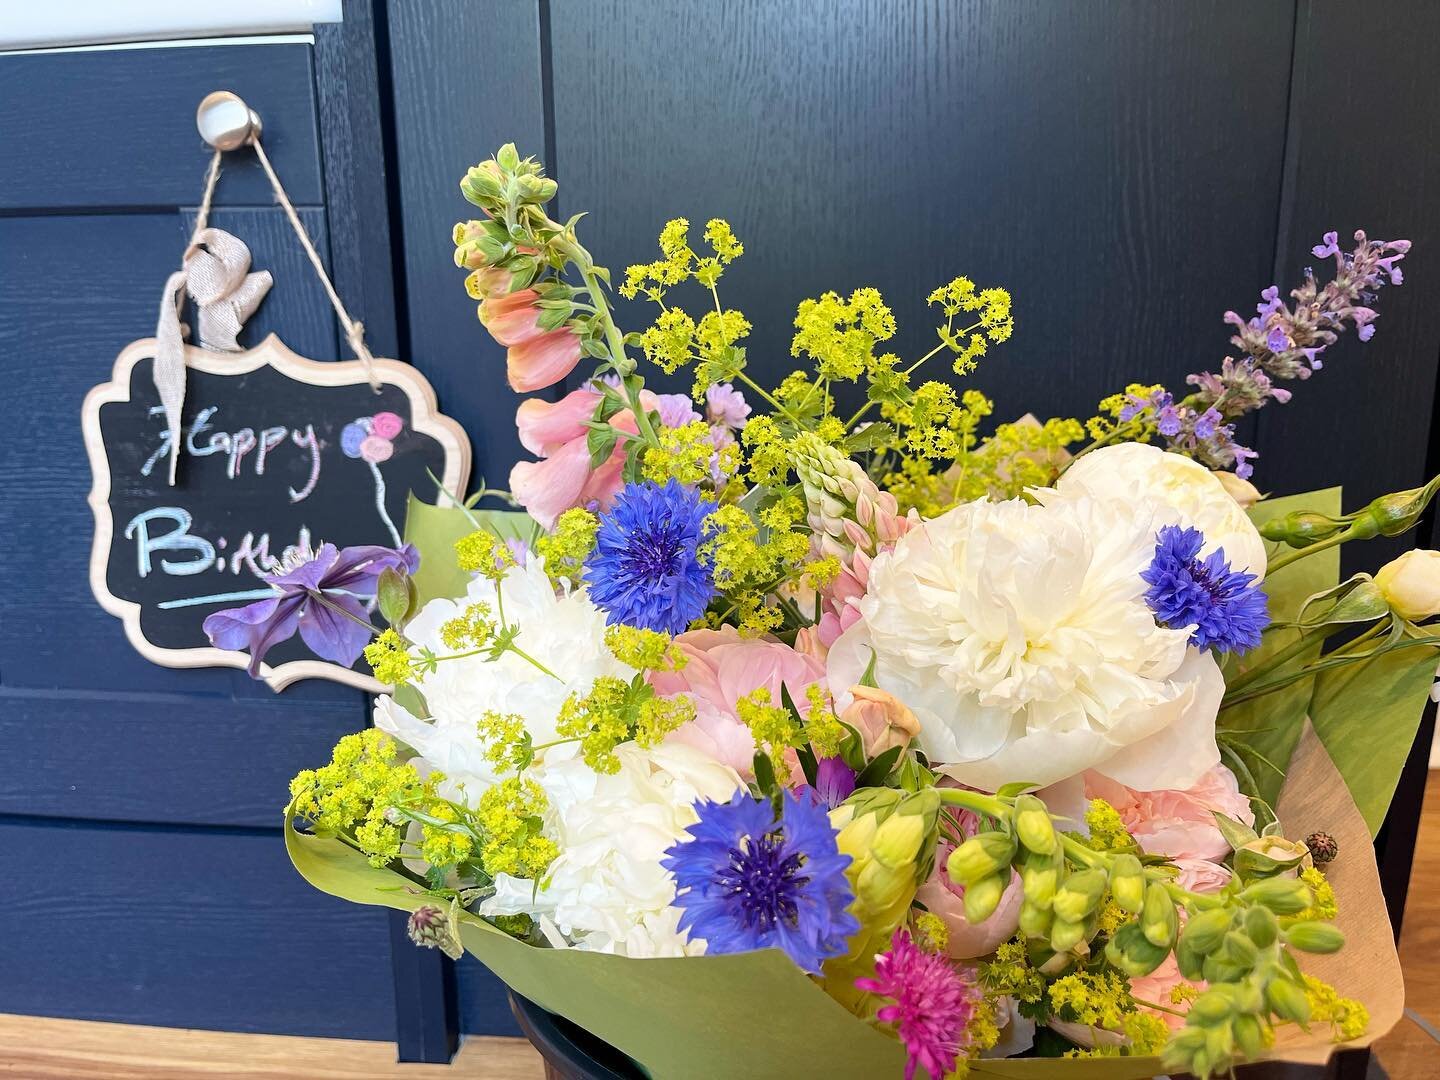 A luxury birthday bouquet of farm grown seasonal British flowers. @oldpastureparkflowers 
-
Cut to order with 24hr notice.